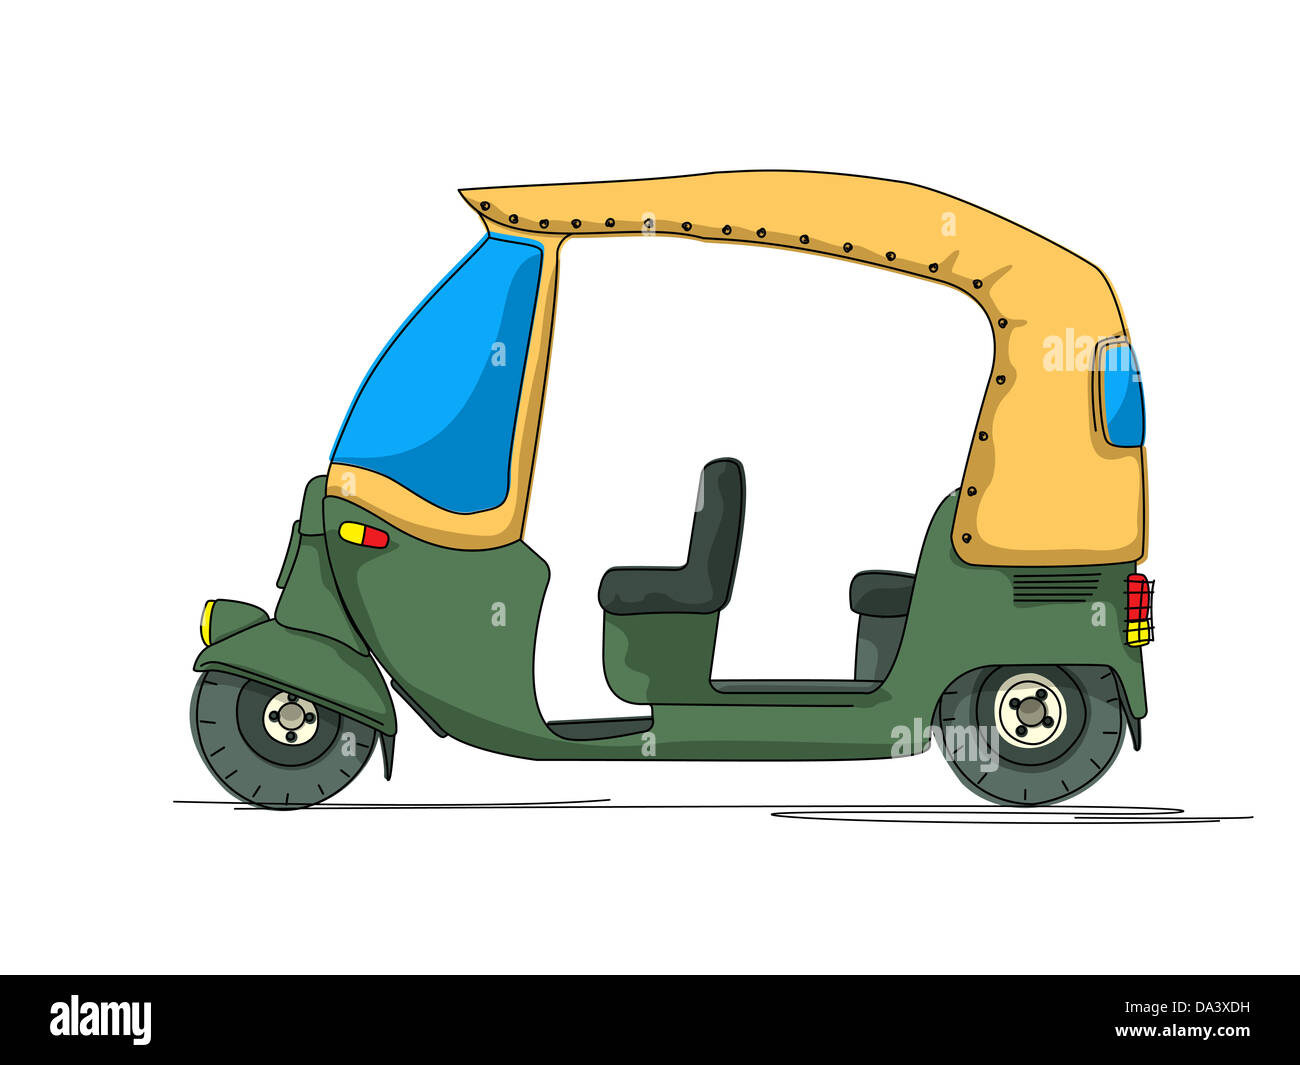 2,261 Rickshaw Vector Images | Depositphotos